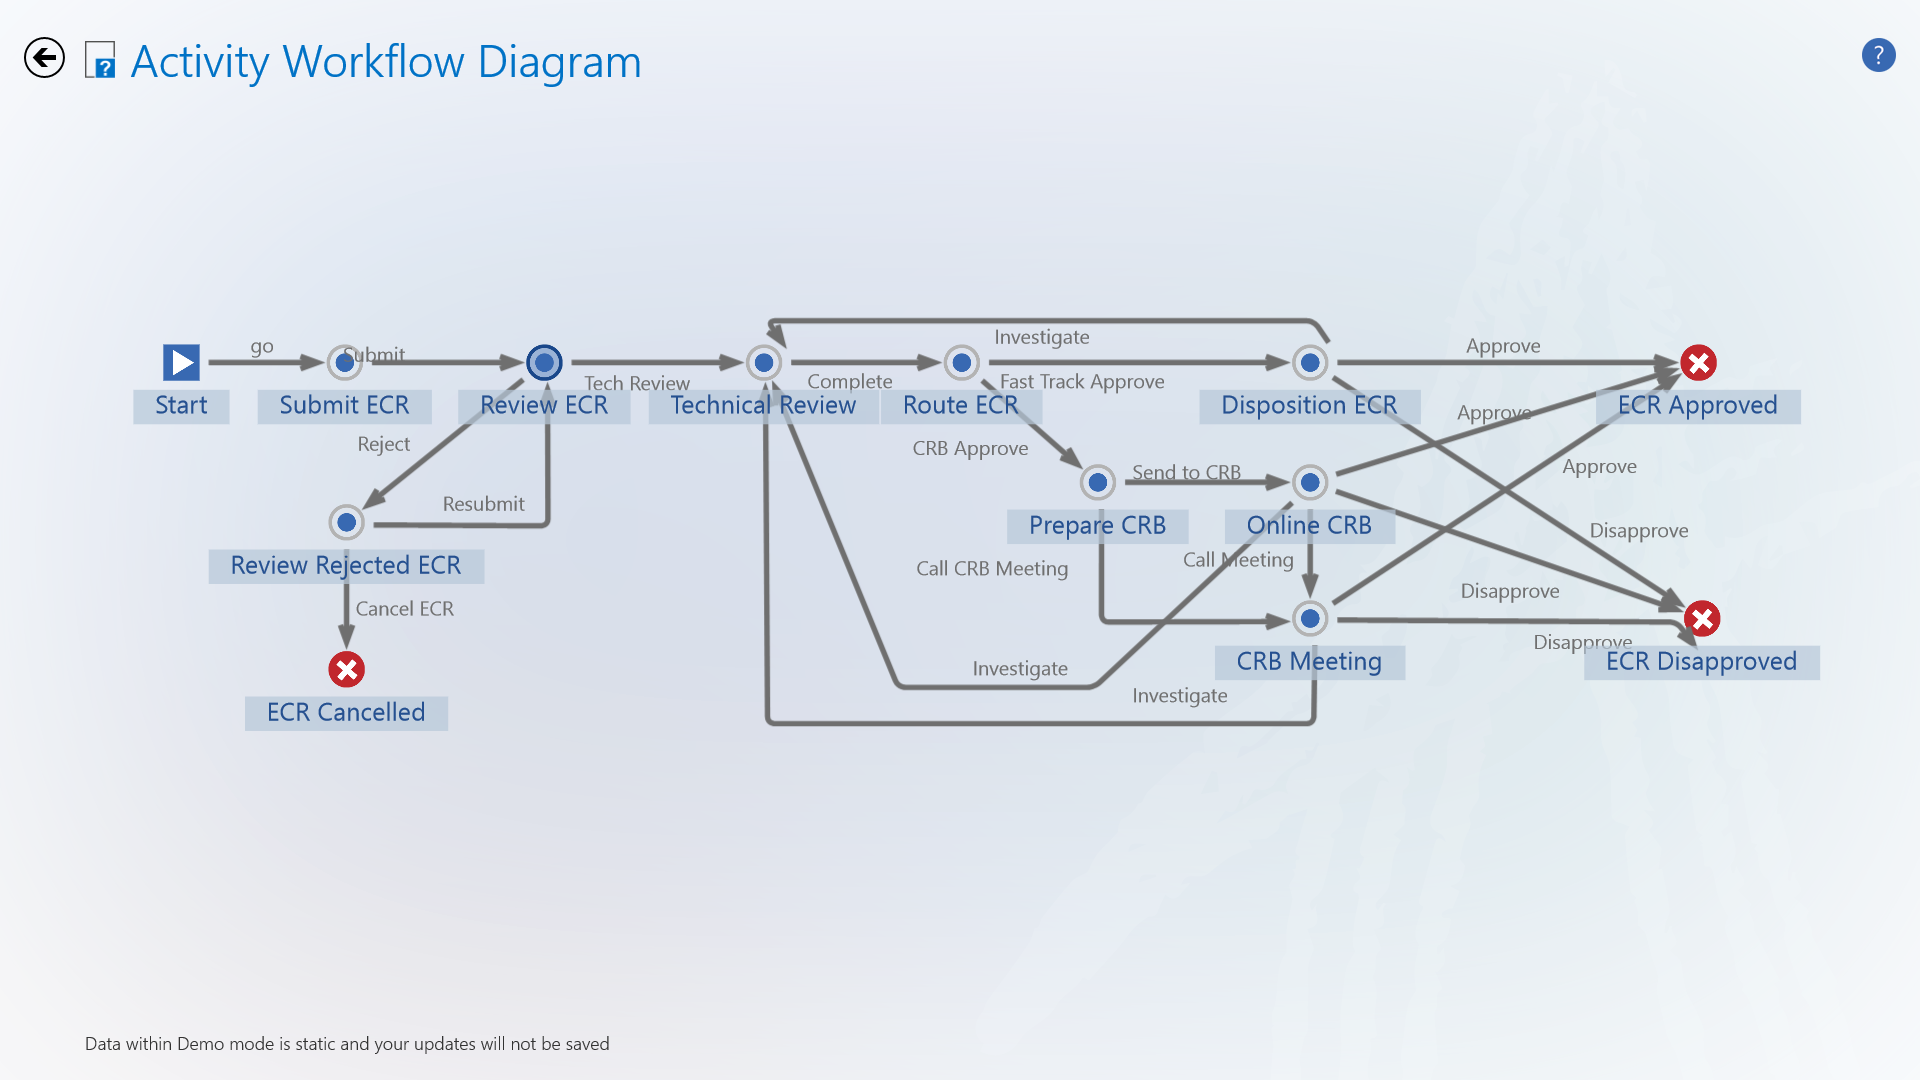 Activity Workflow Diagram